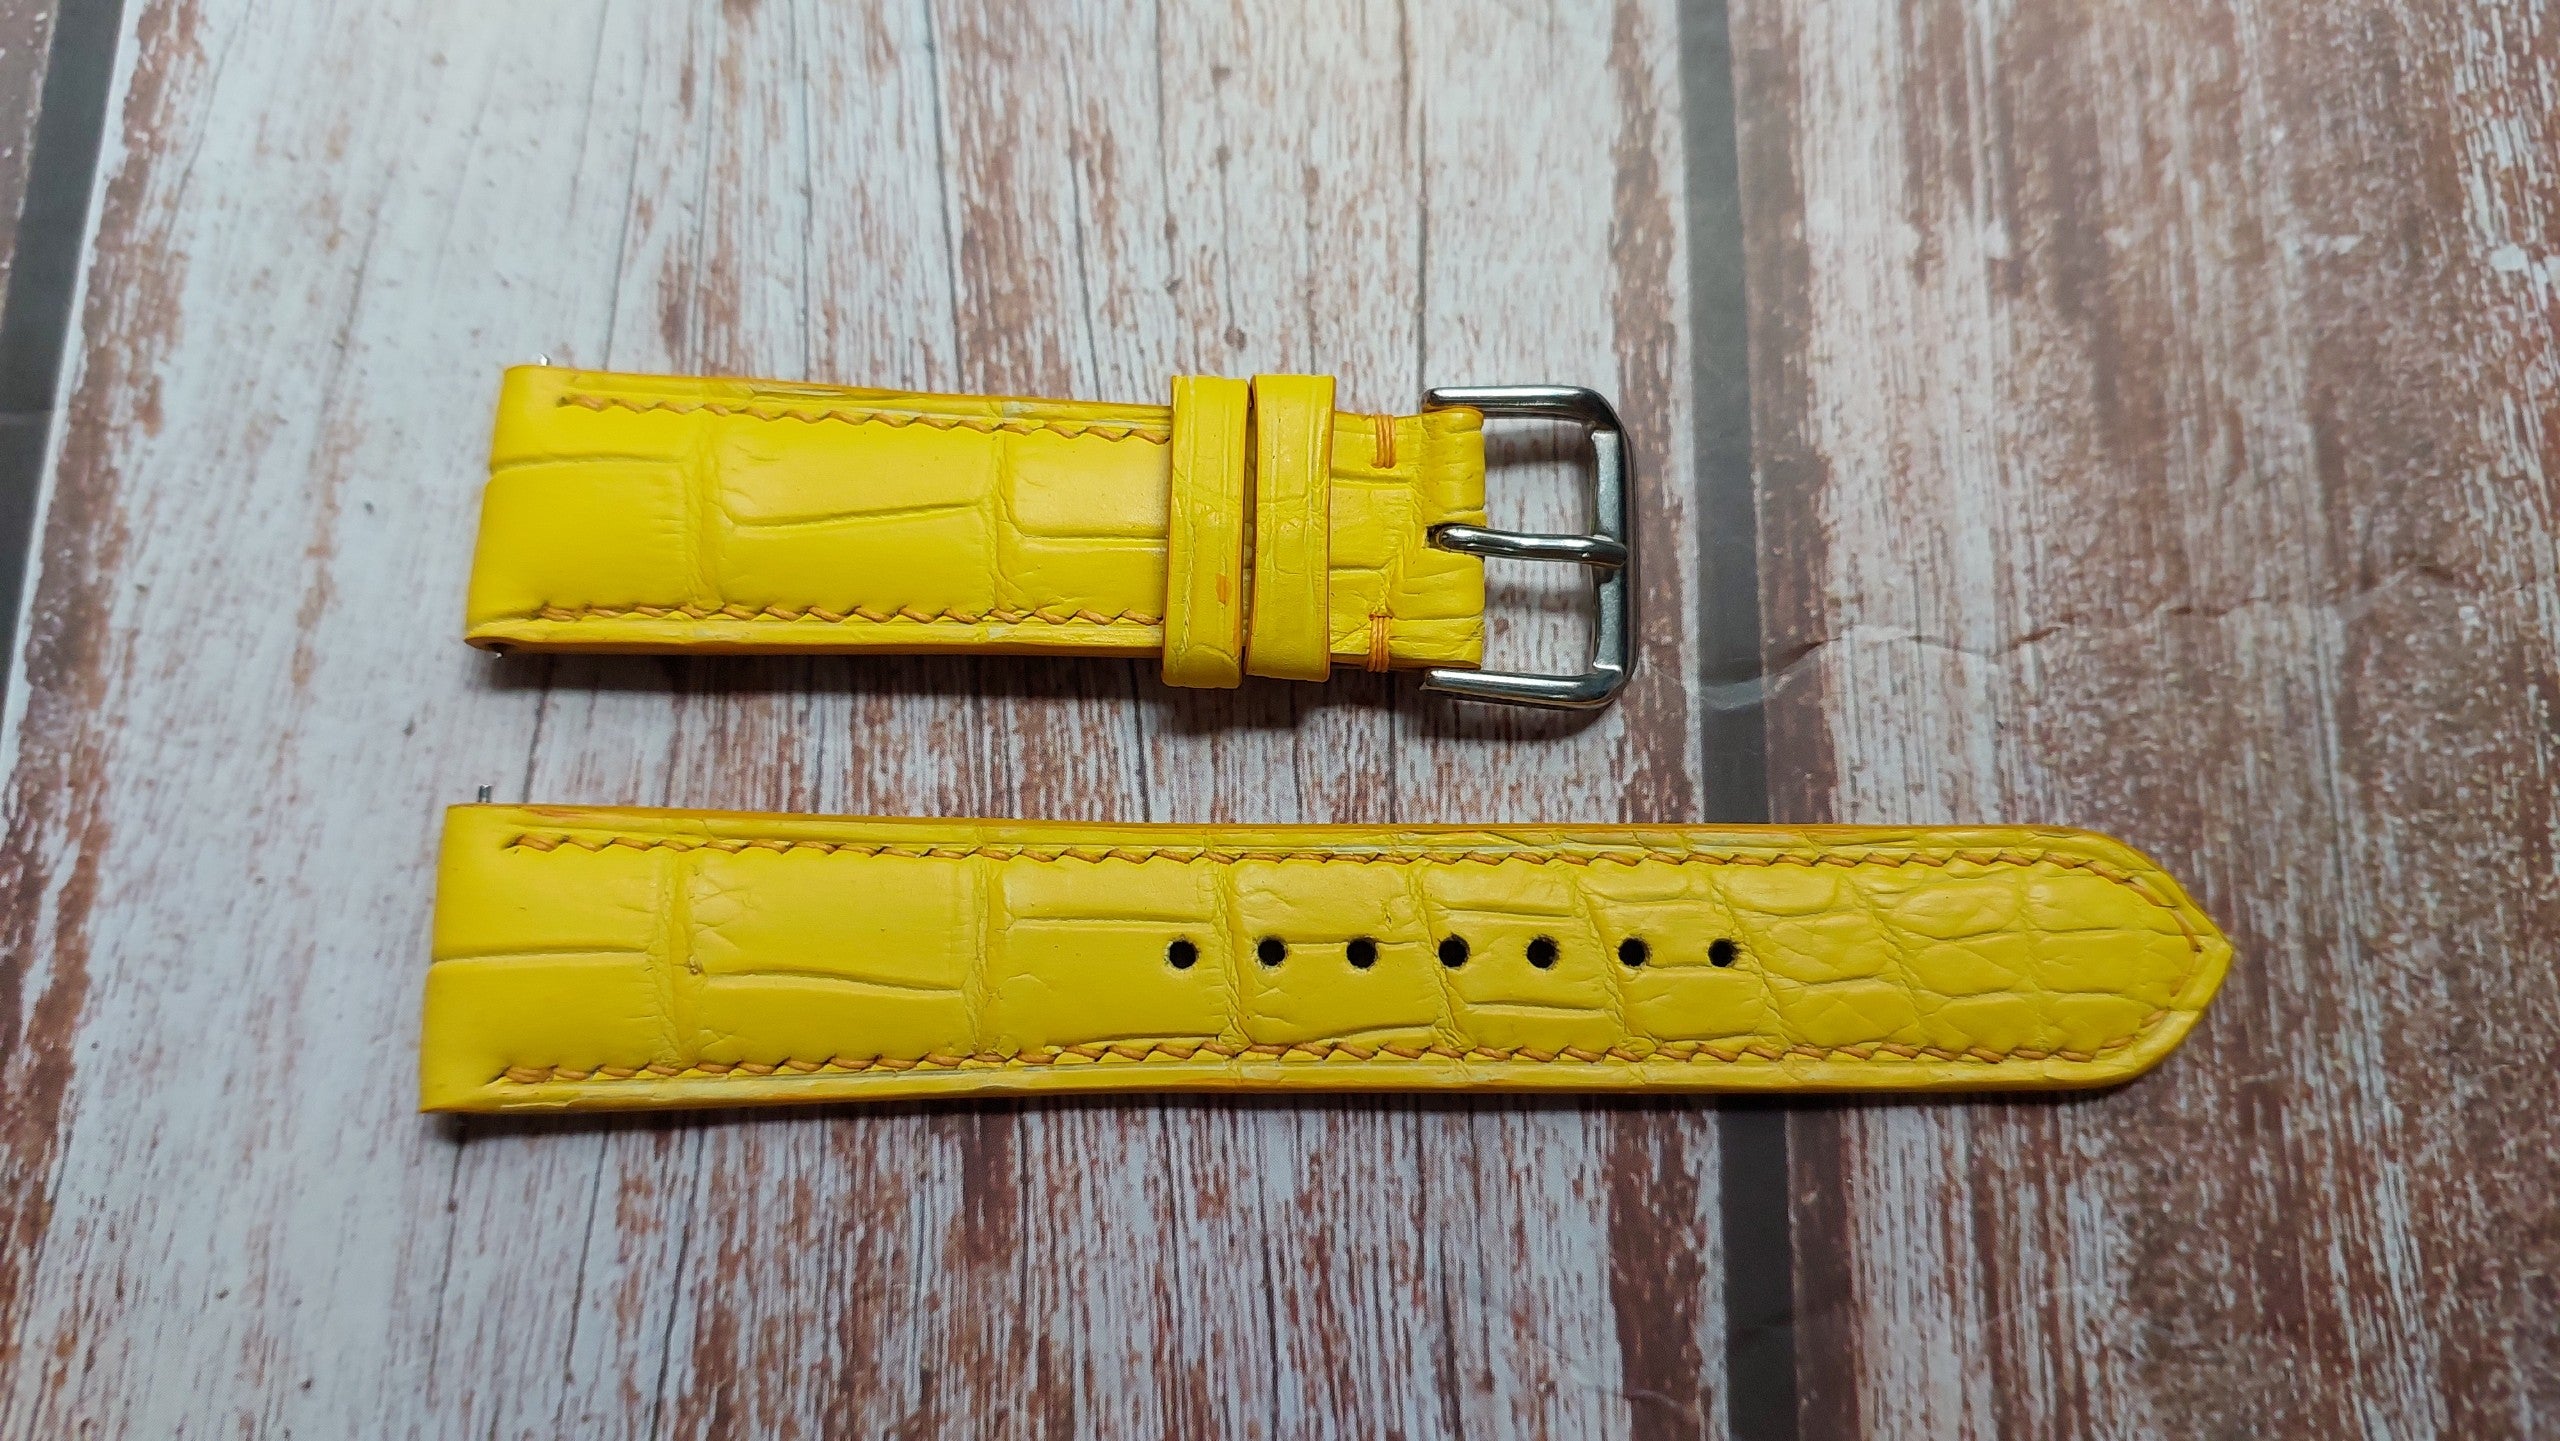 Crocodile Leather Apple Watch Strap - Yellow